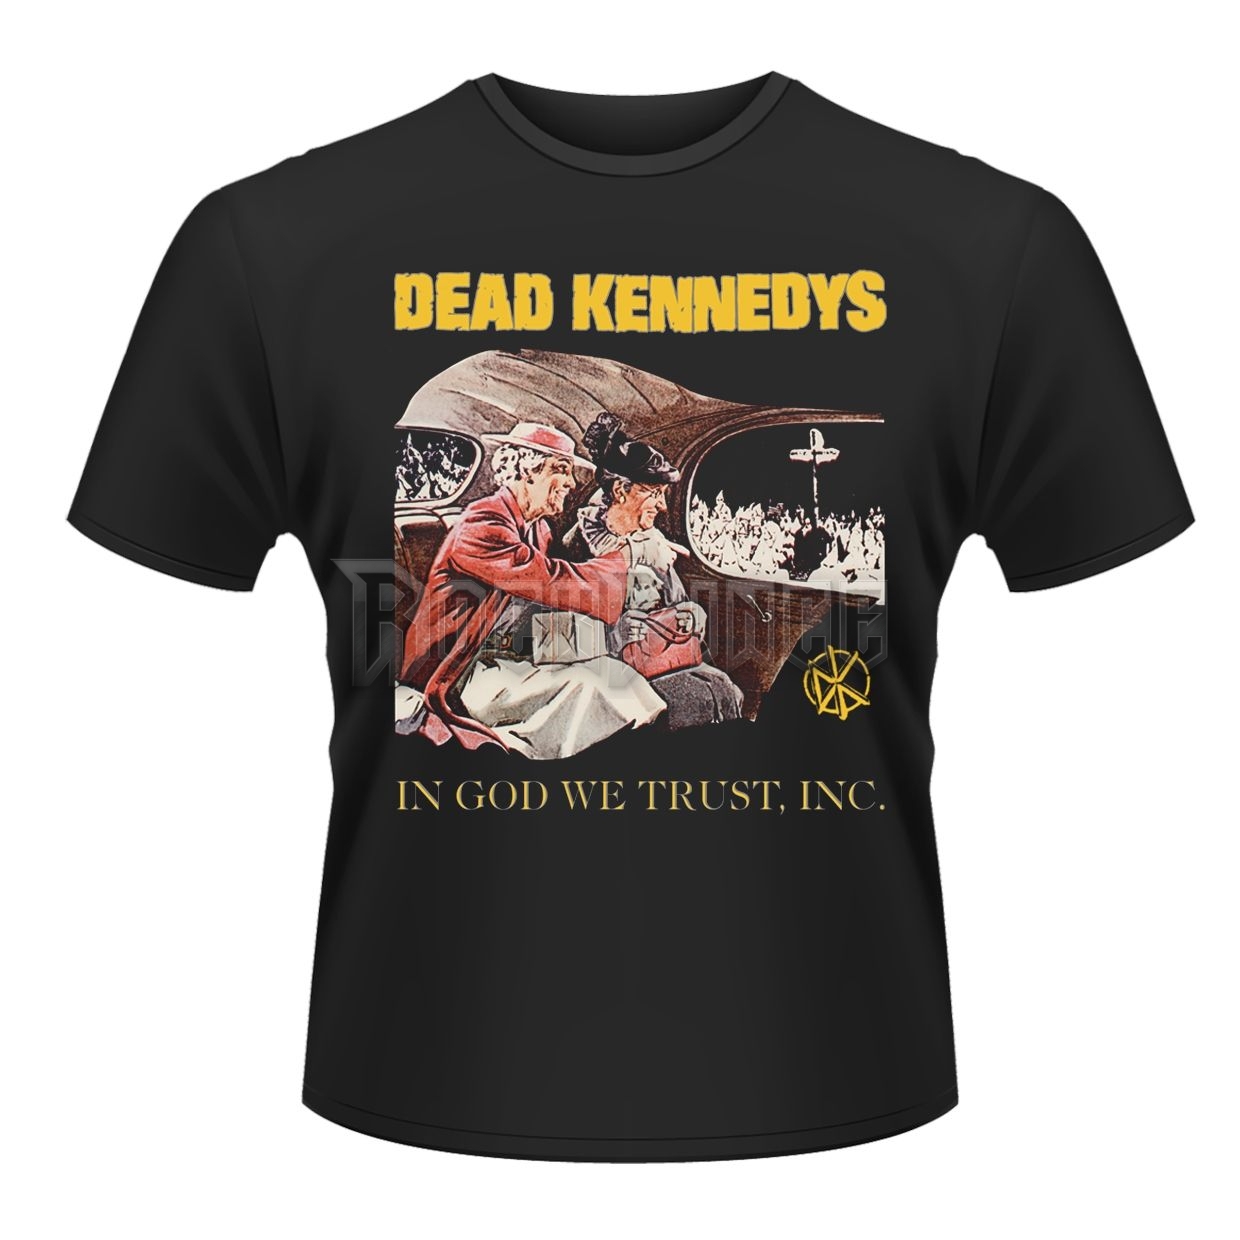 DEAD KENNEDYS - IN GOD WE TRUST - PH7975